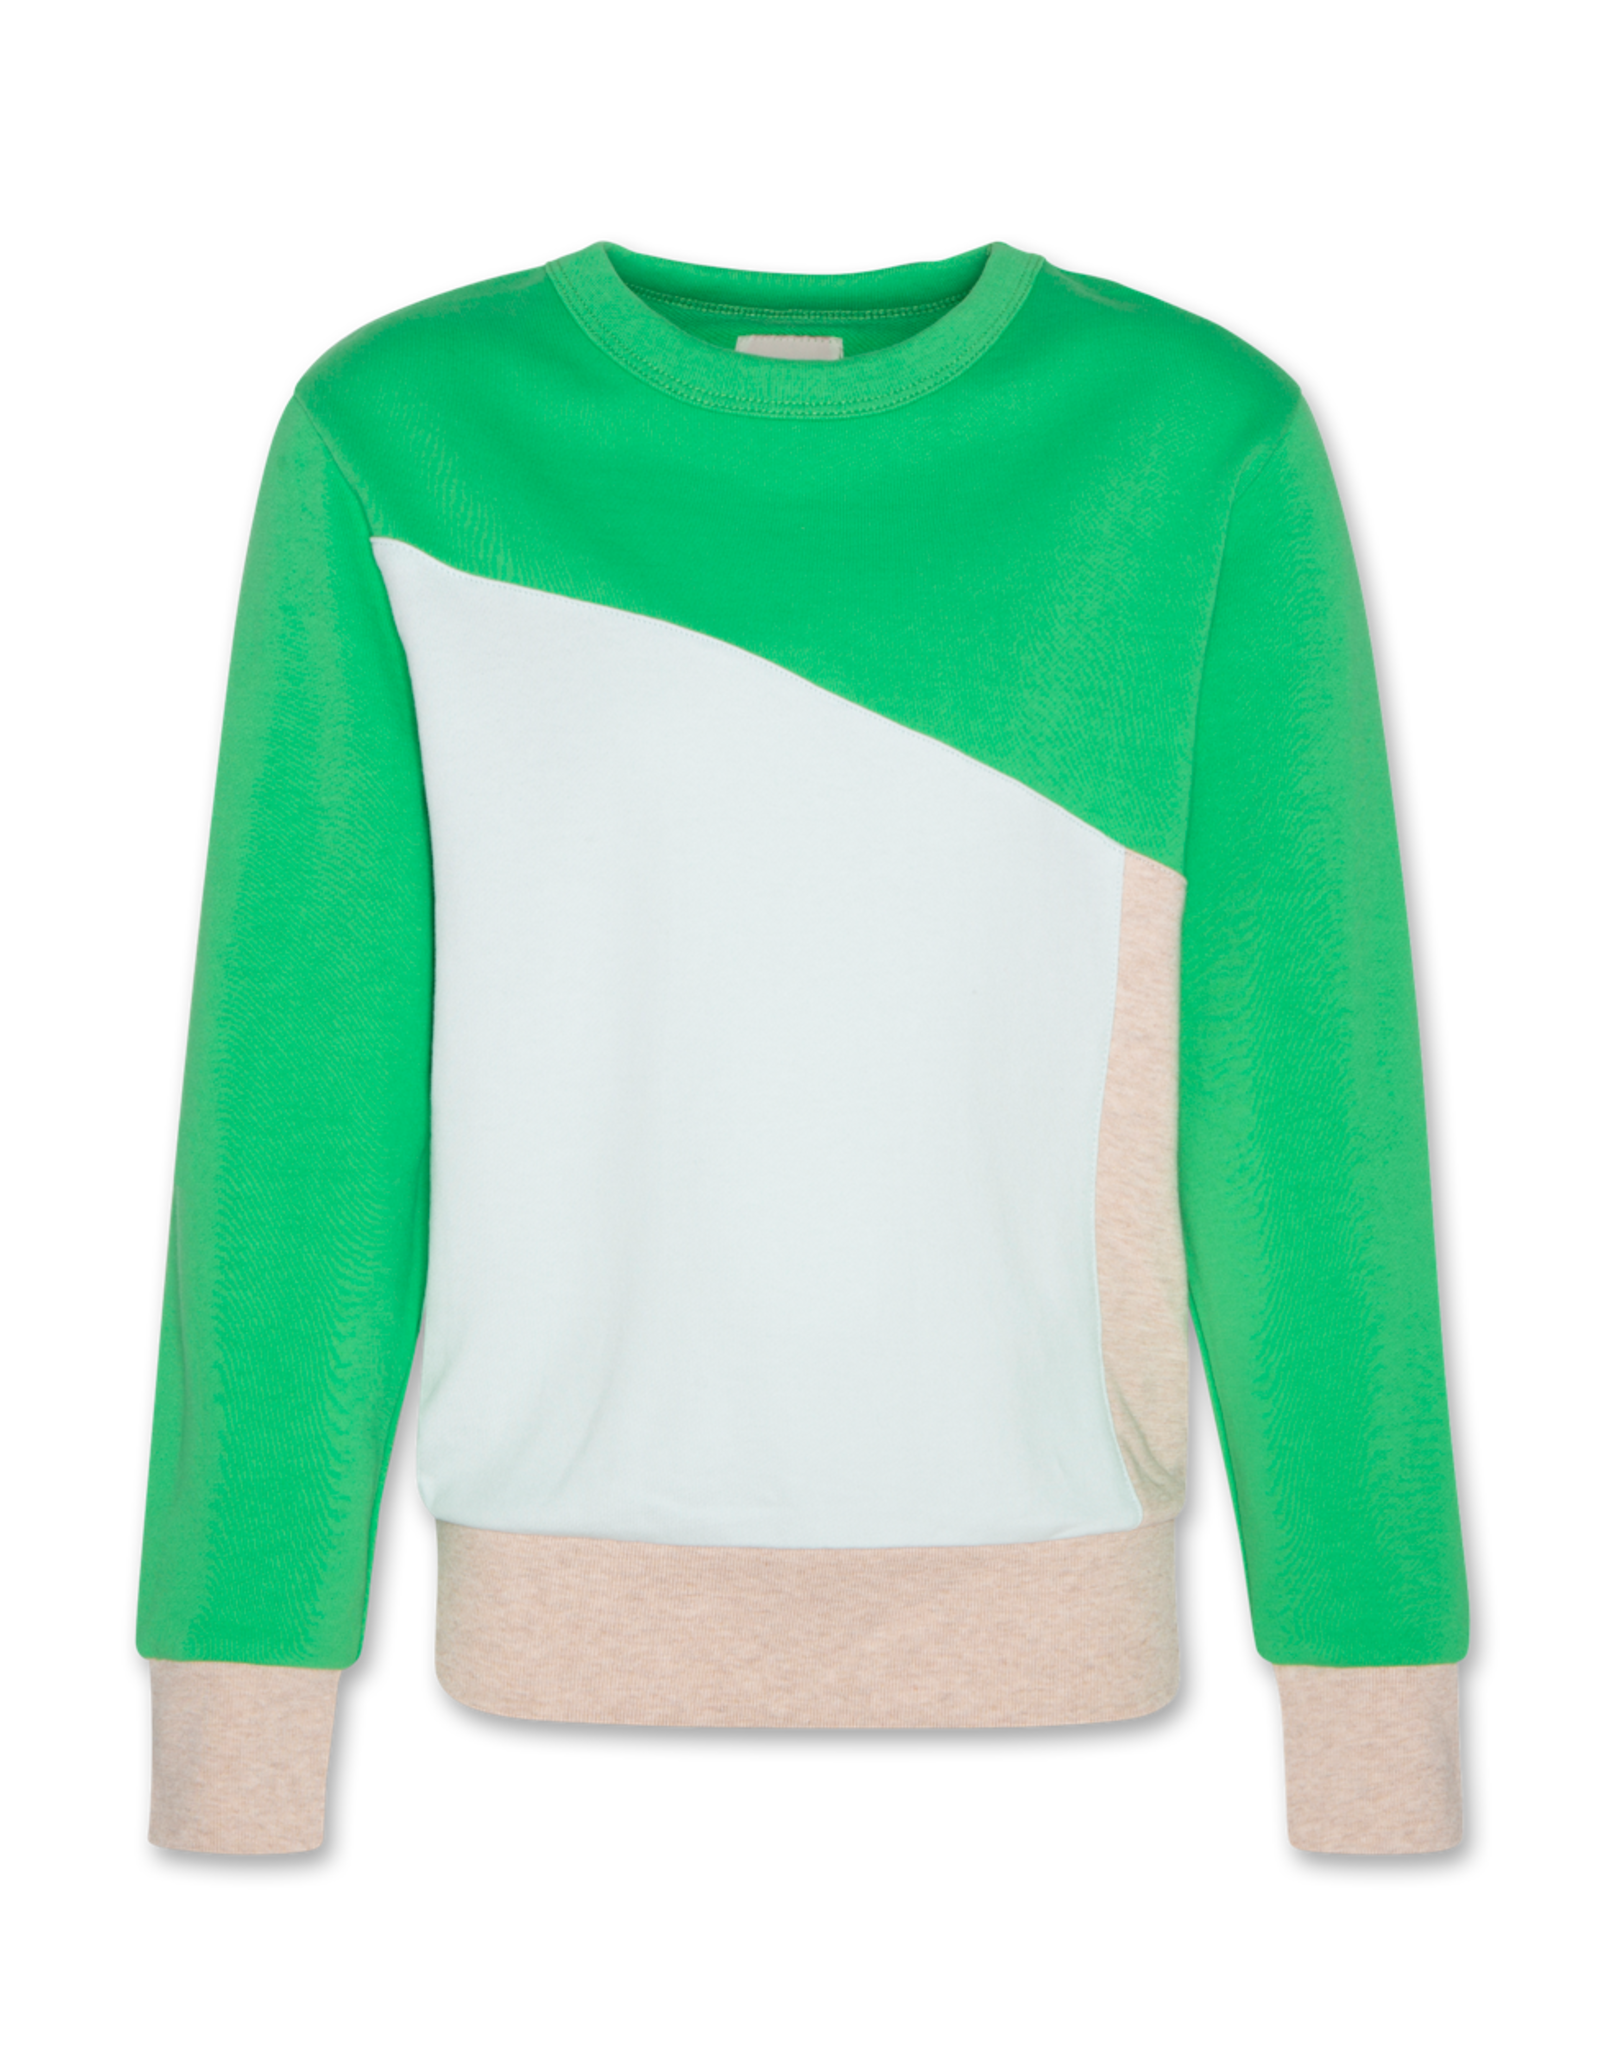 A076 Niels sweater colour block